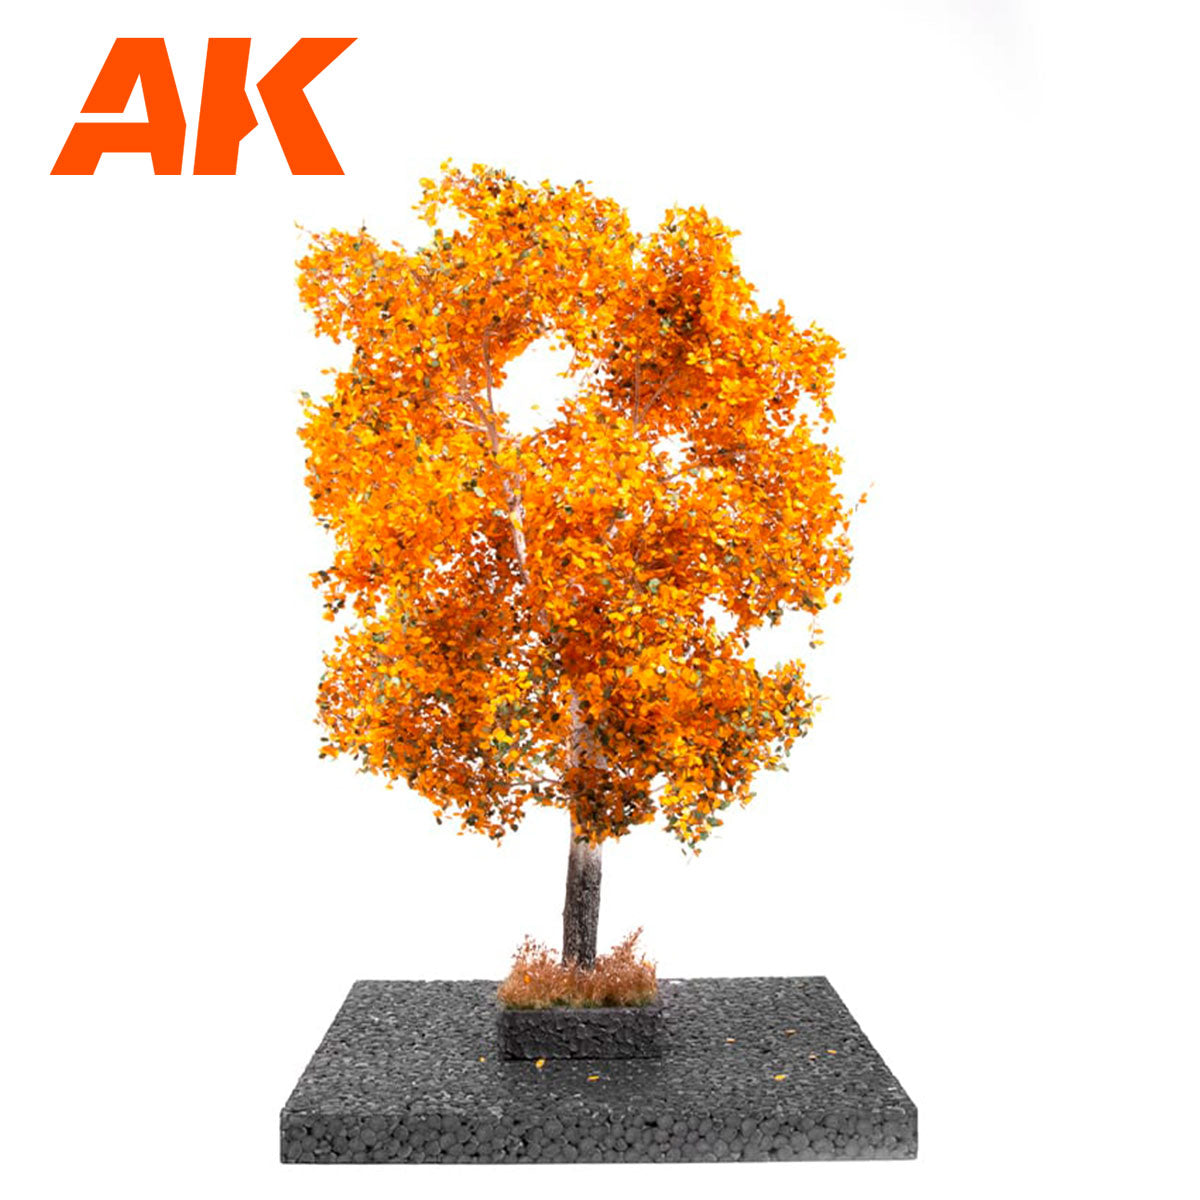 AK Interactive Diorama AK8032 Dark & Dry Crackle Effects Acrylic Paint  100ml 